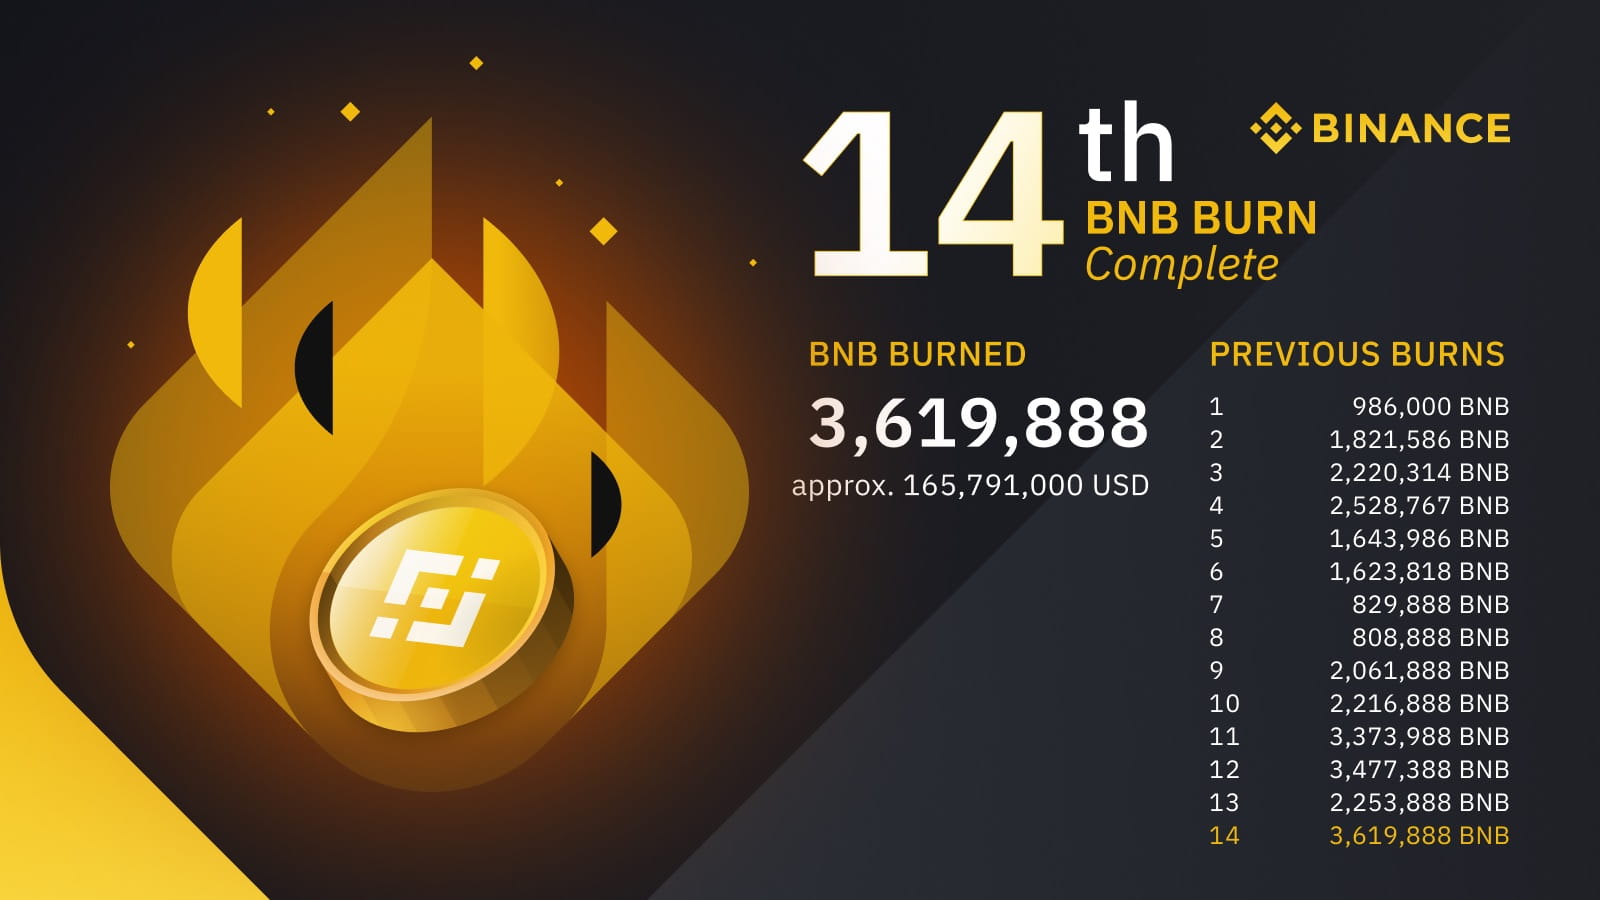 Binance Burns 2M $BNB in 20th Quarterly Burn Event